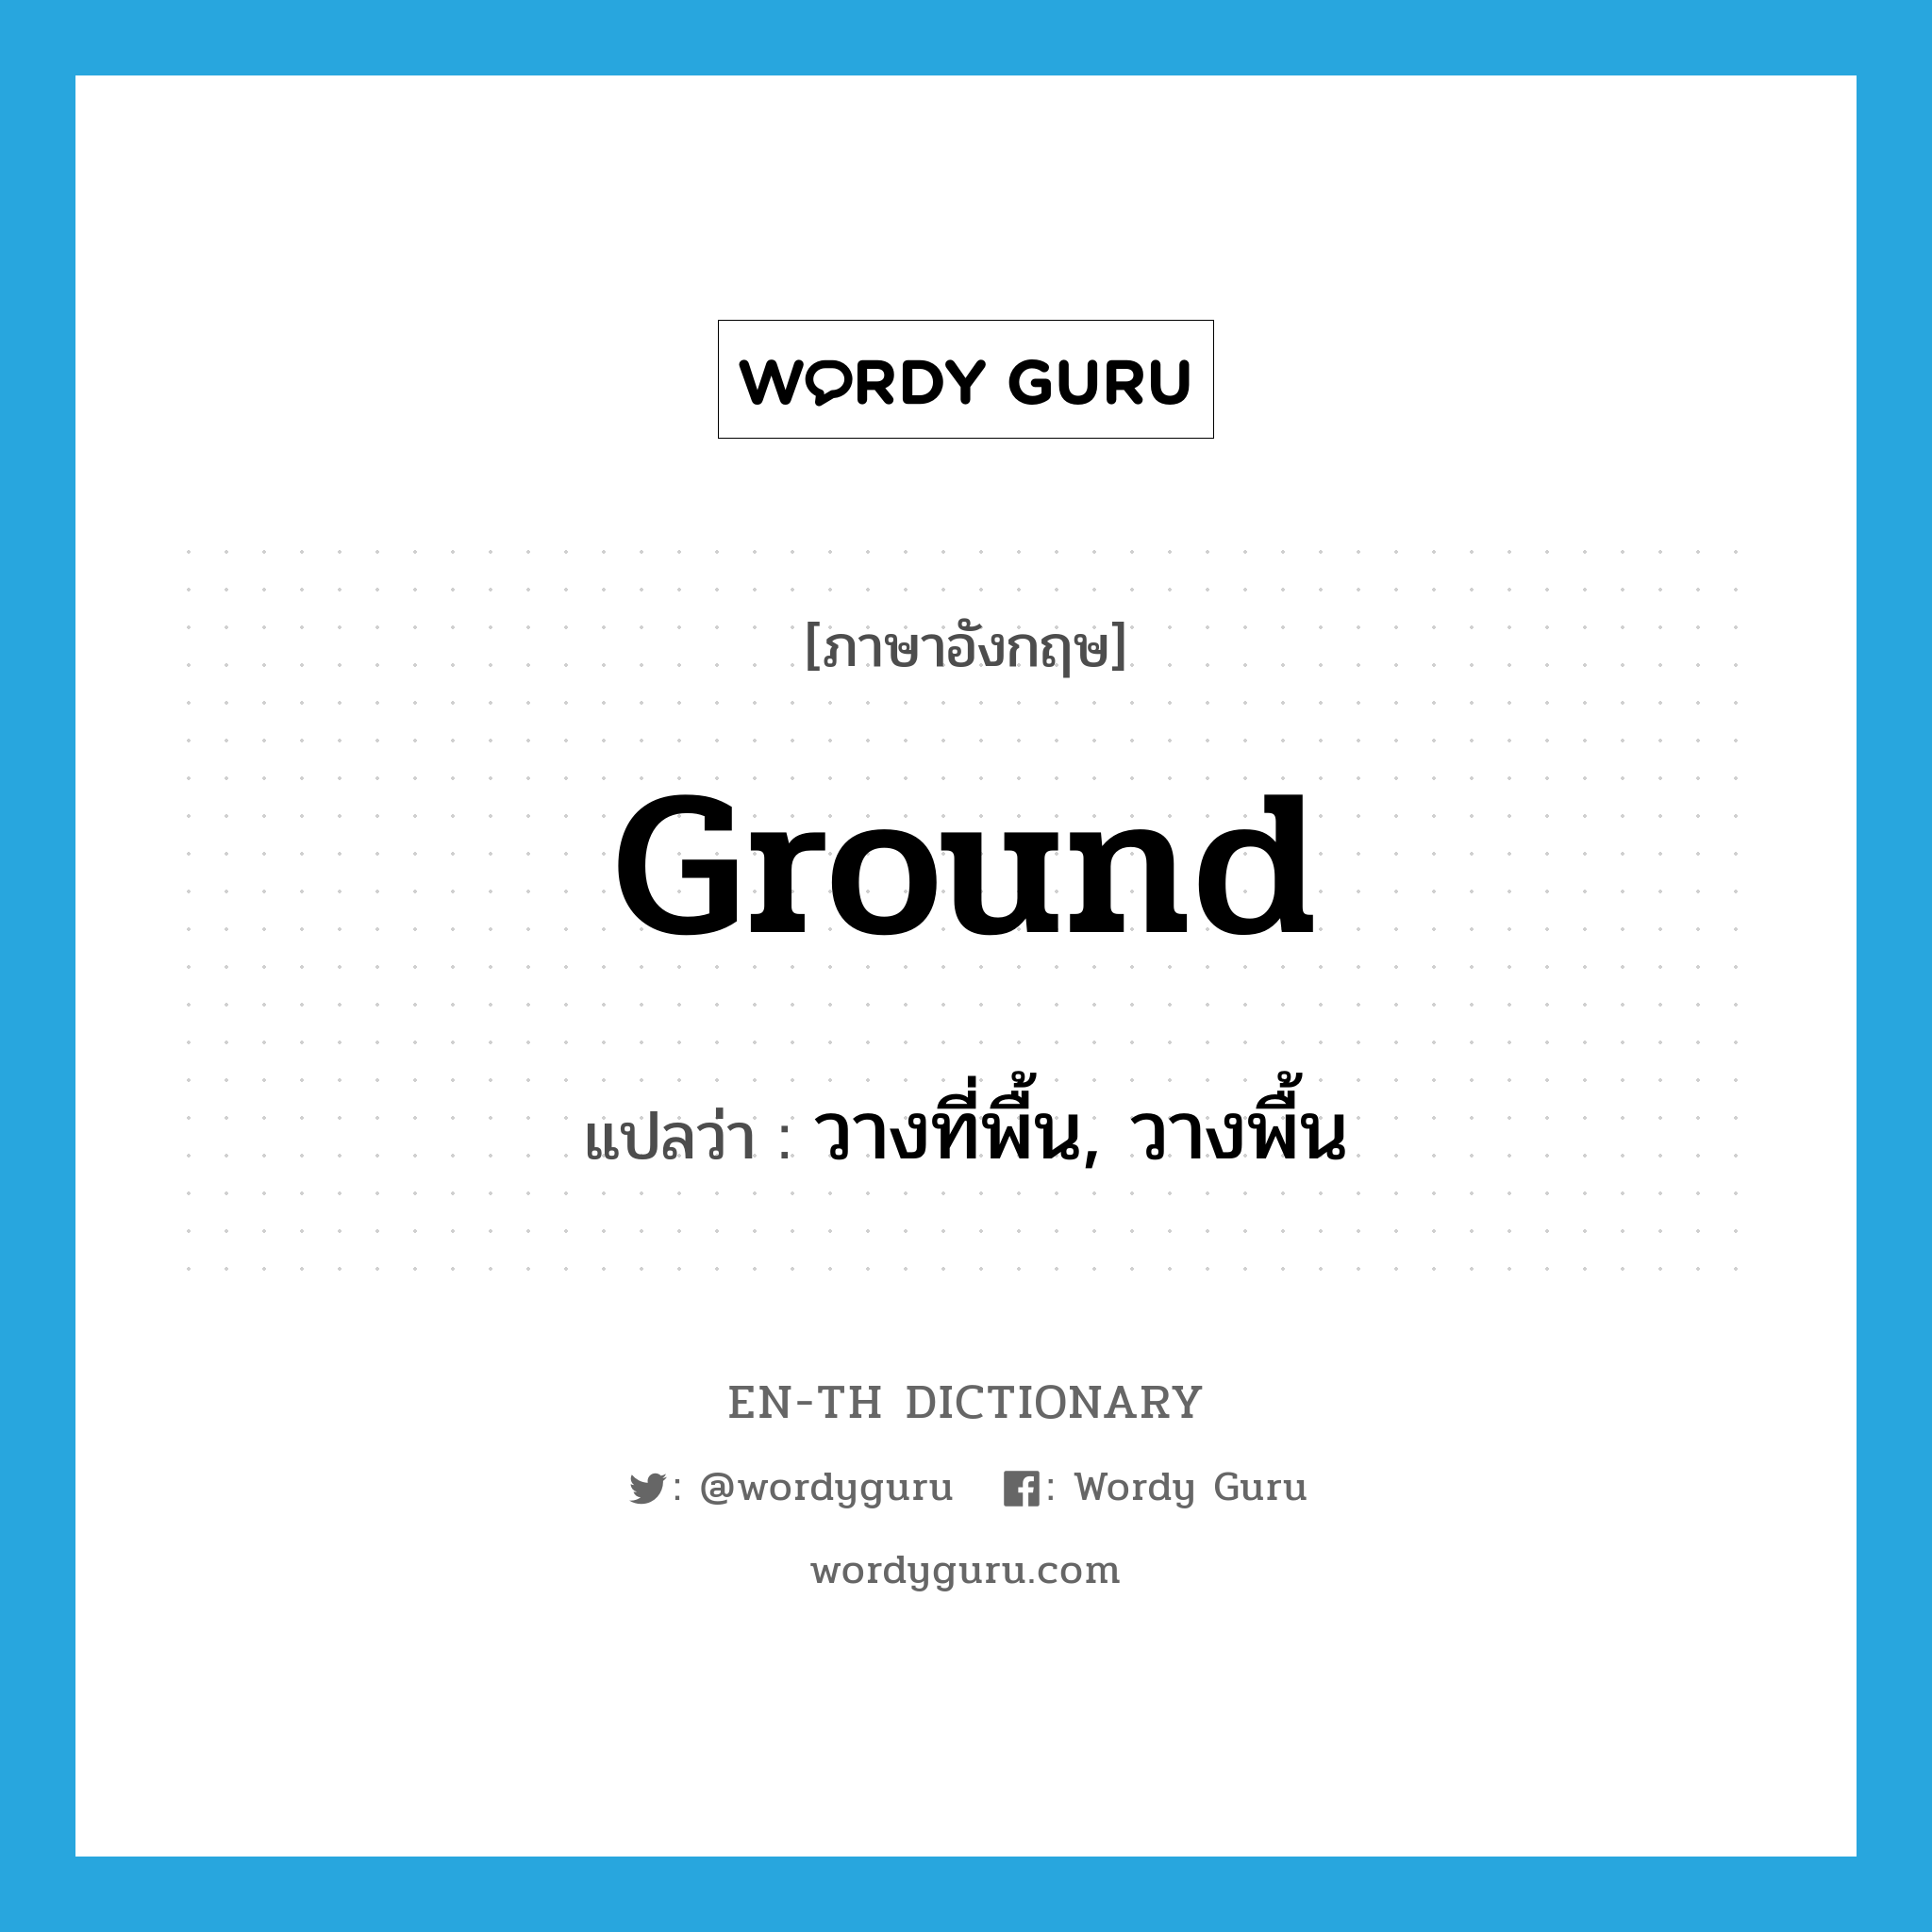 ground